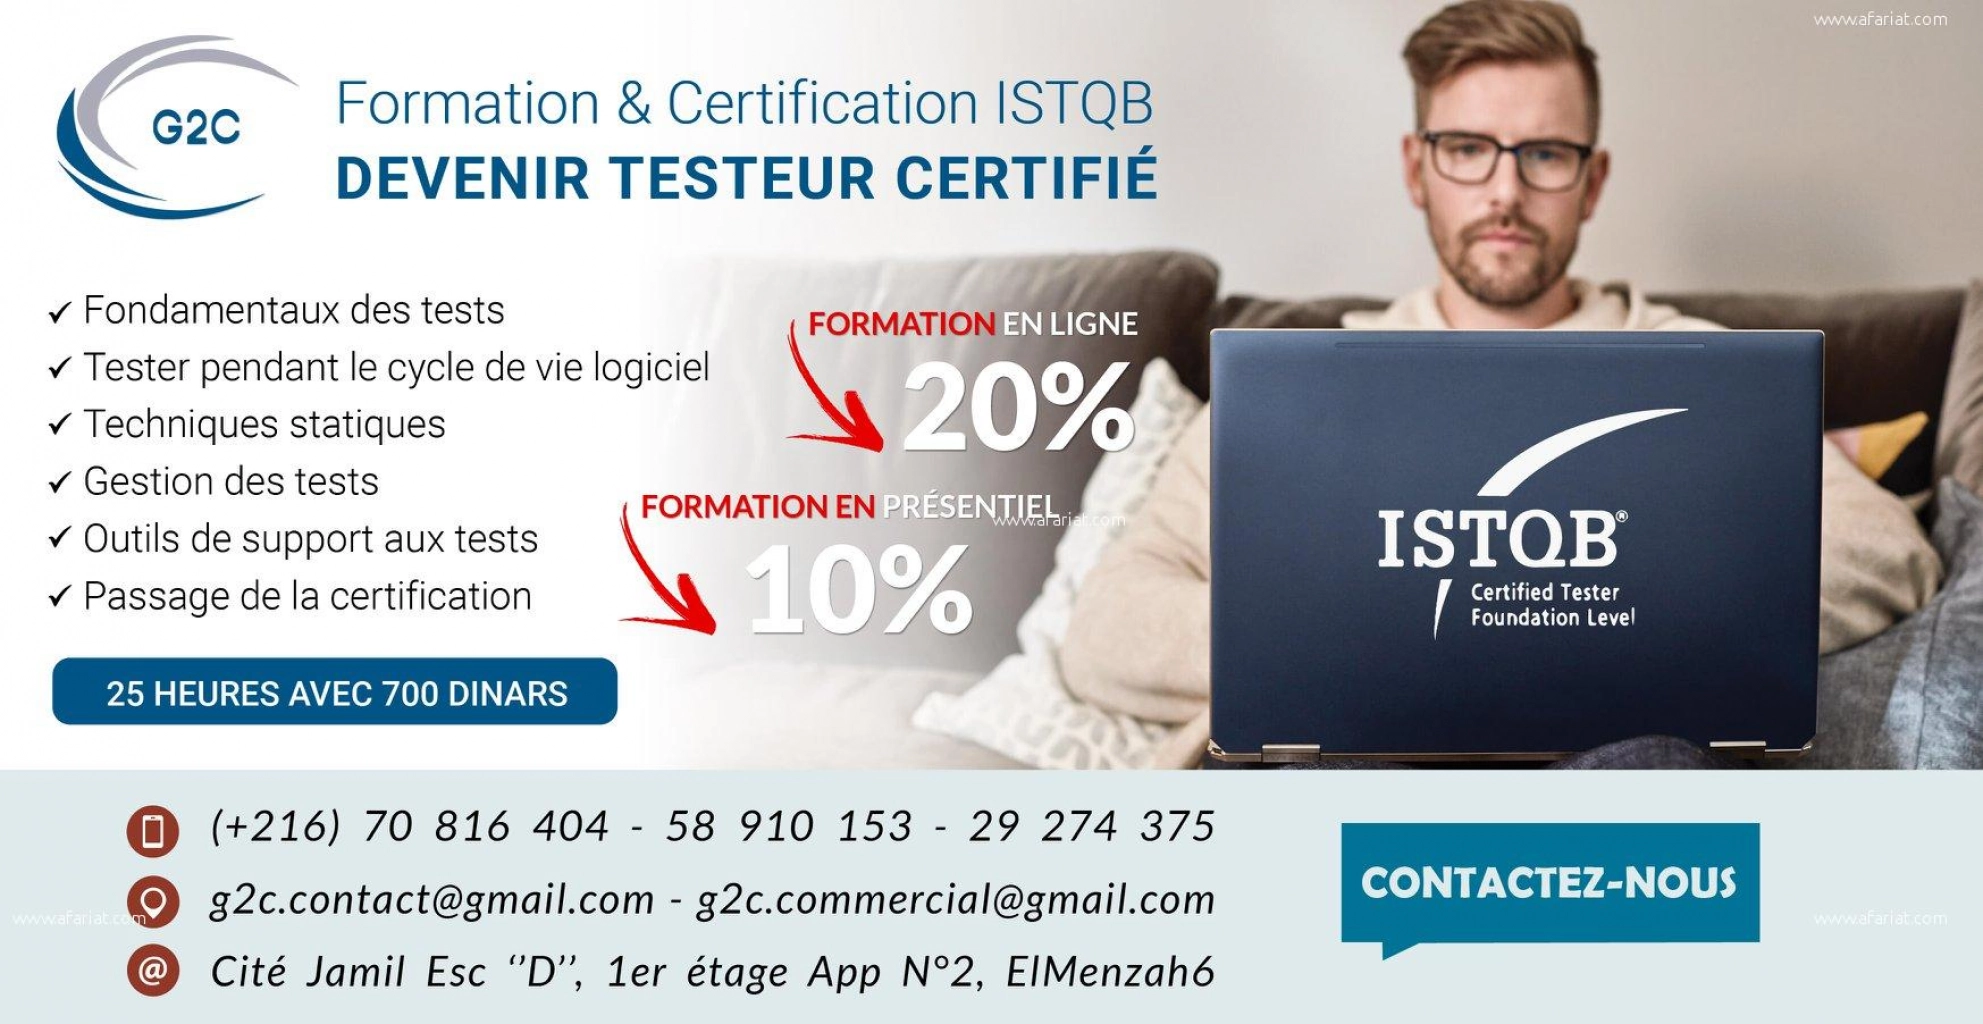 Formation_Certification_ISTQB_niveau_Foundation